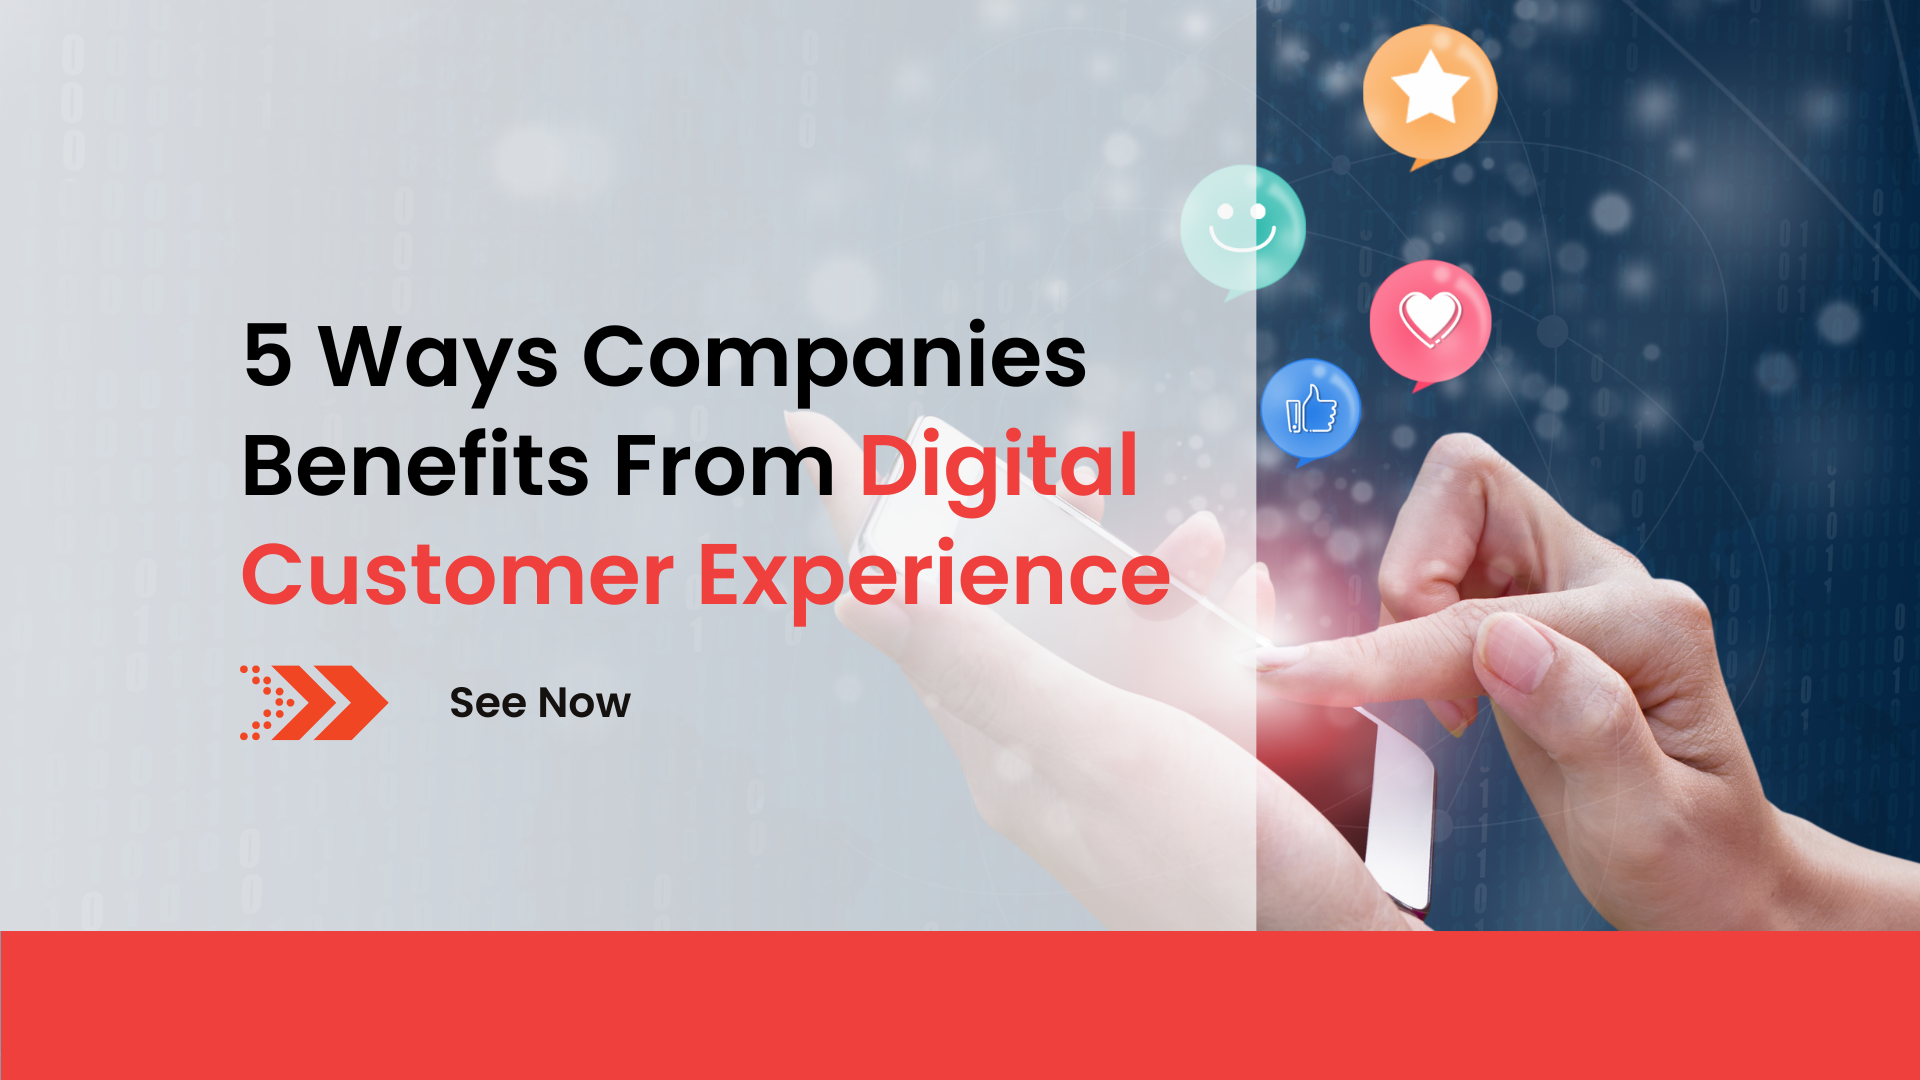 5 Ways Companies Benefits From Digital Customer Experience1